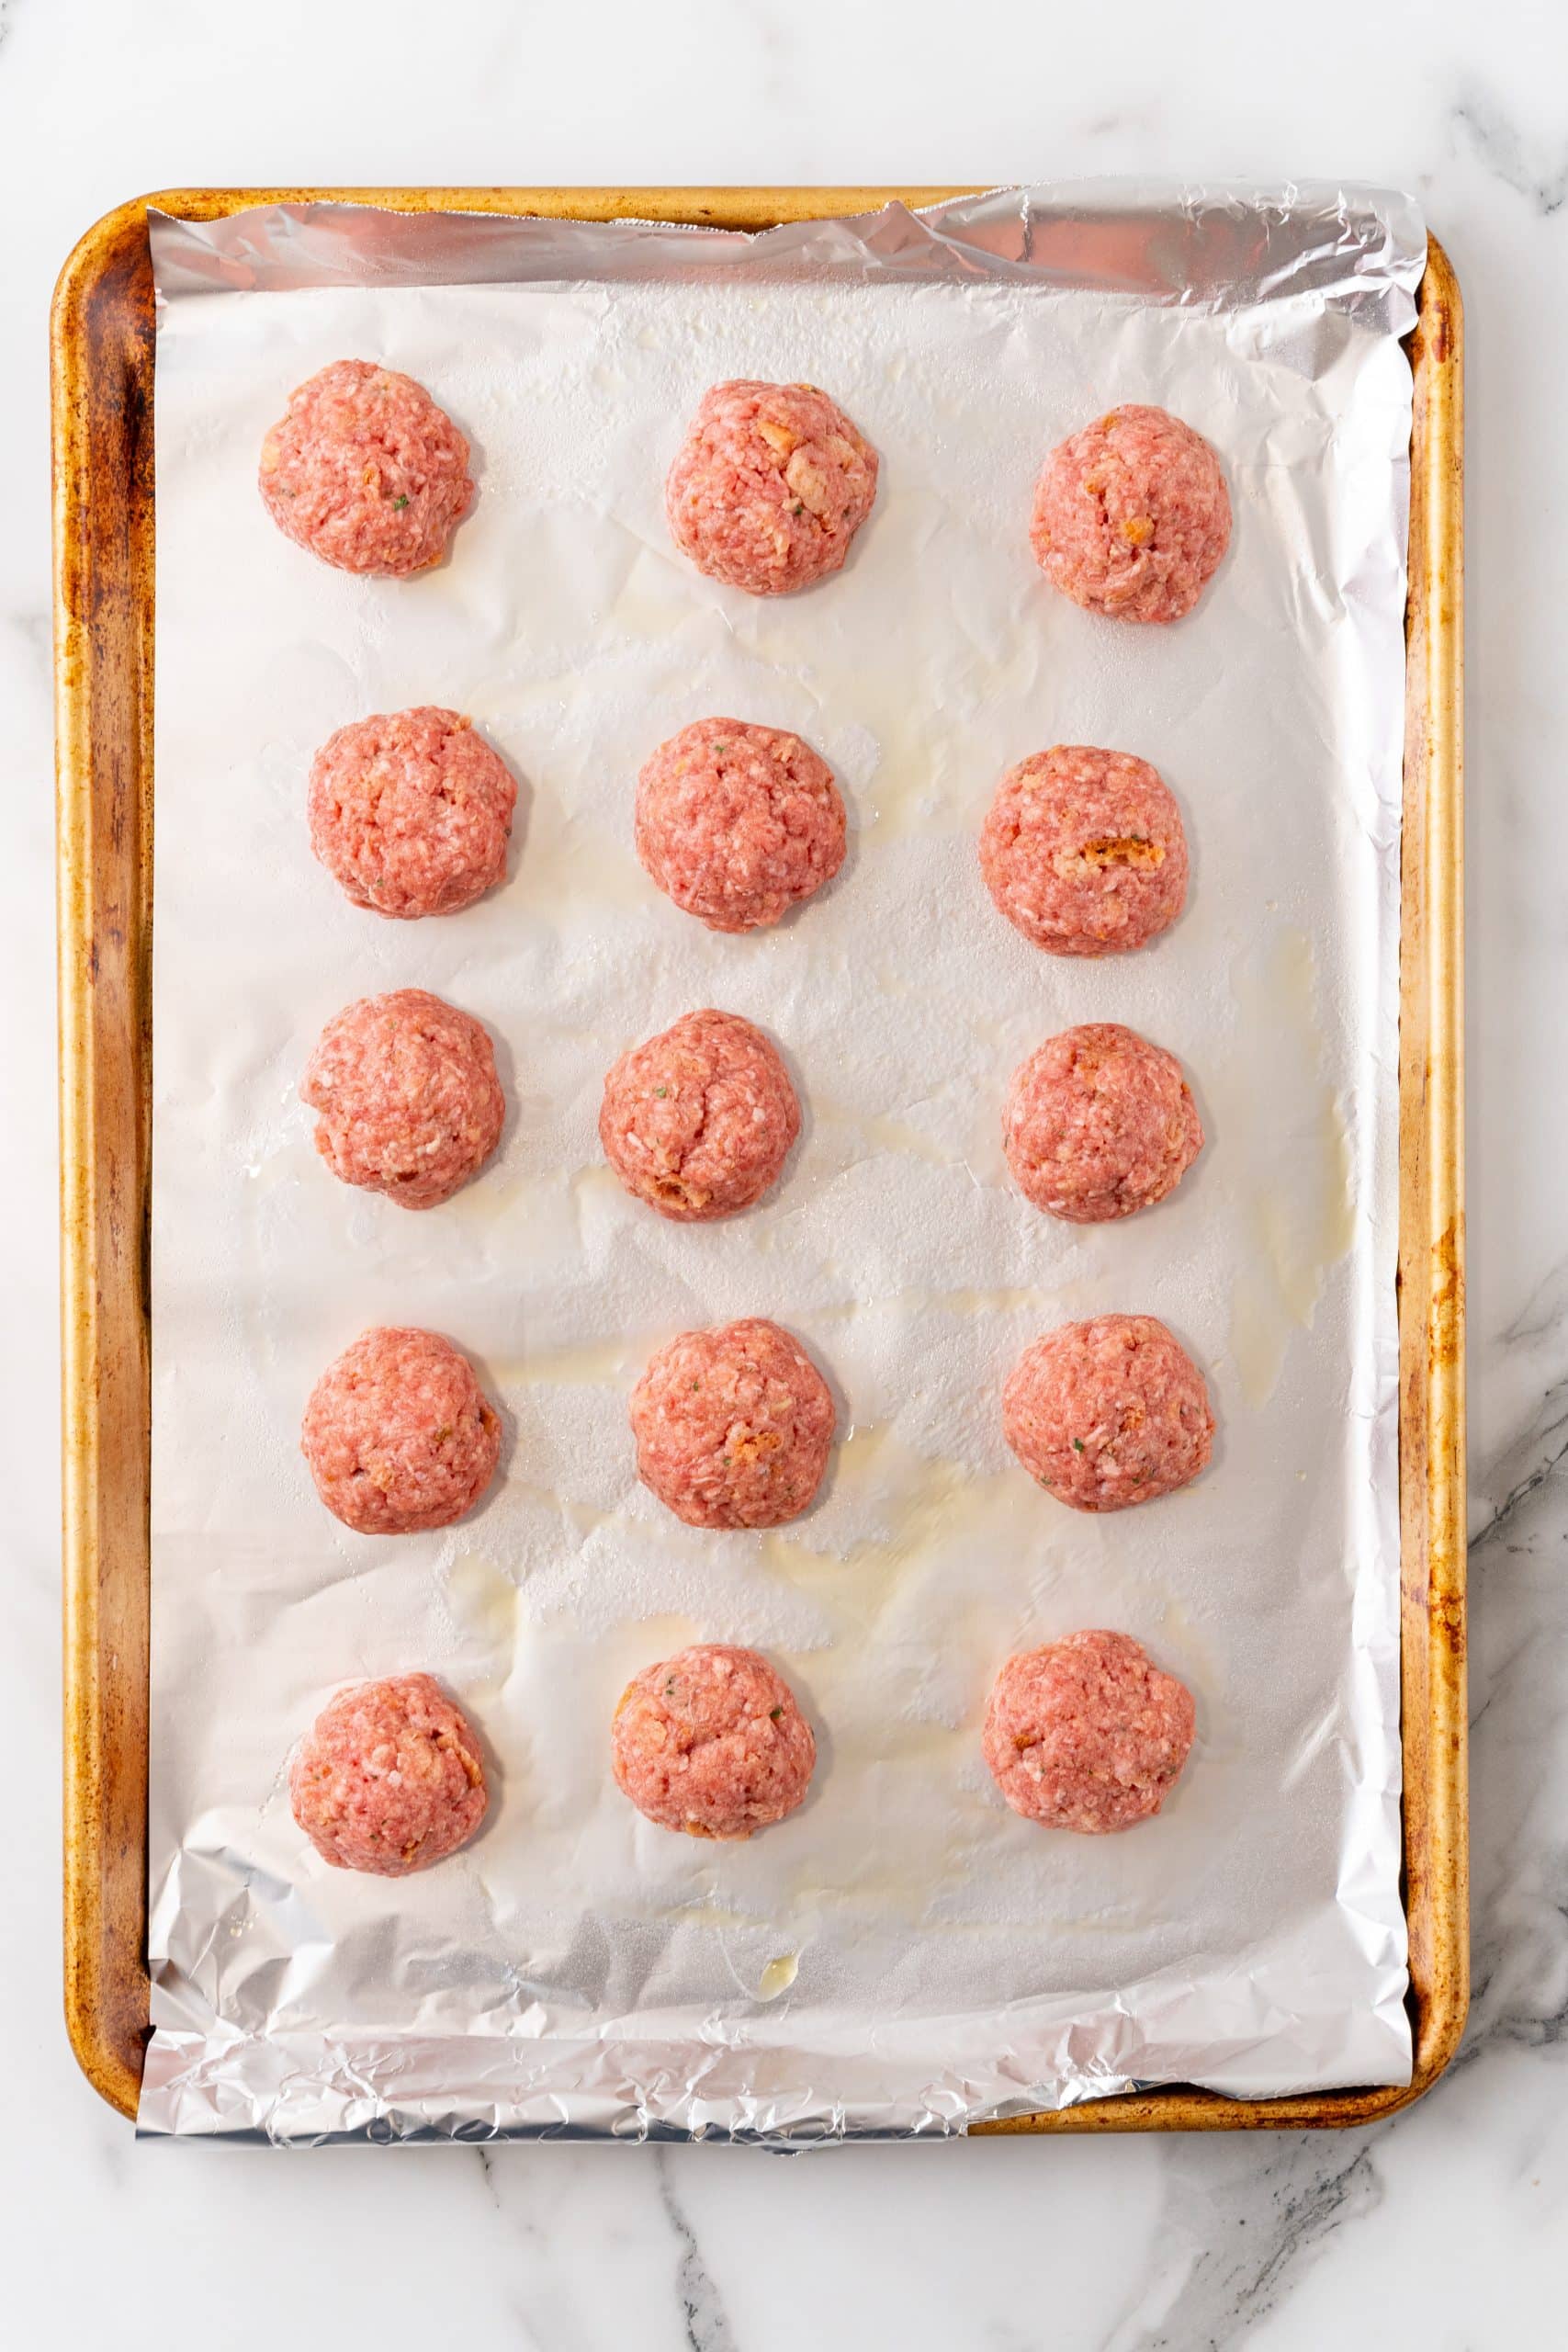 easy baked meatballs arranged on a foil lined baking sheet